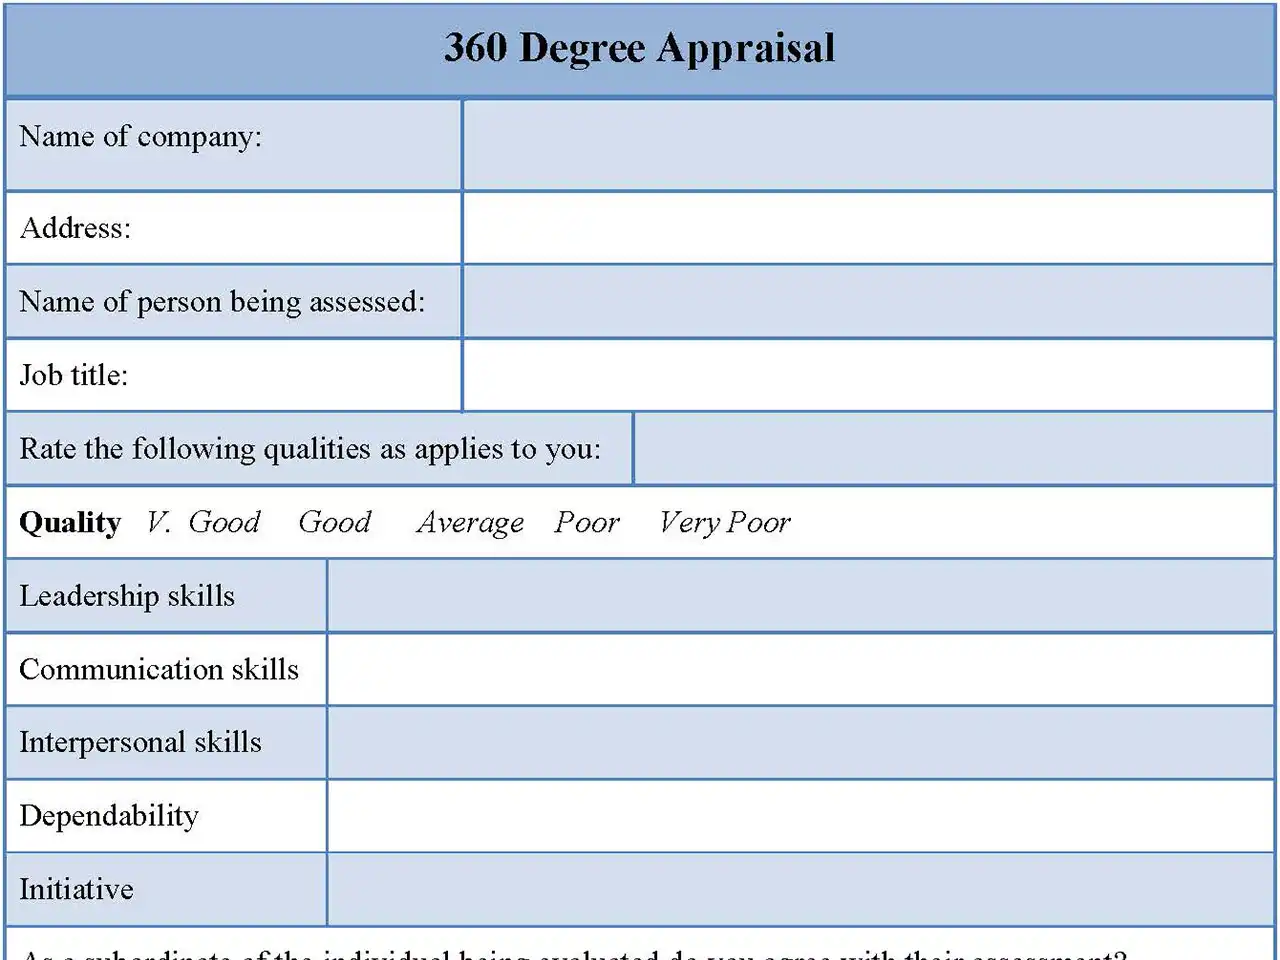 360 Degree Appraisal Fillable PDF Forms